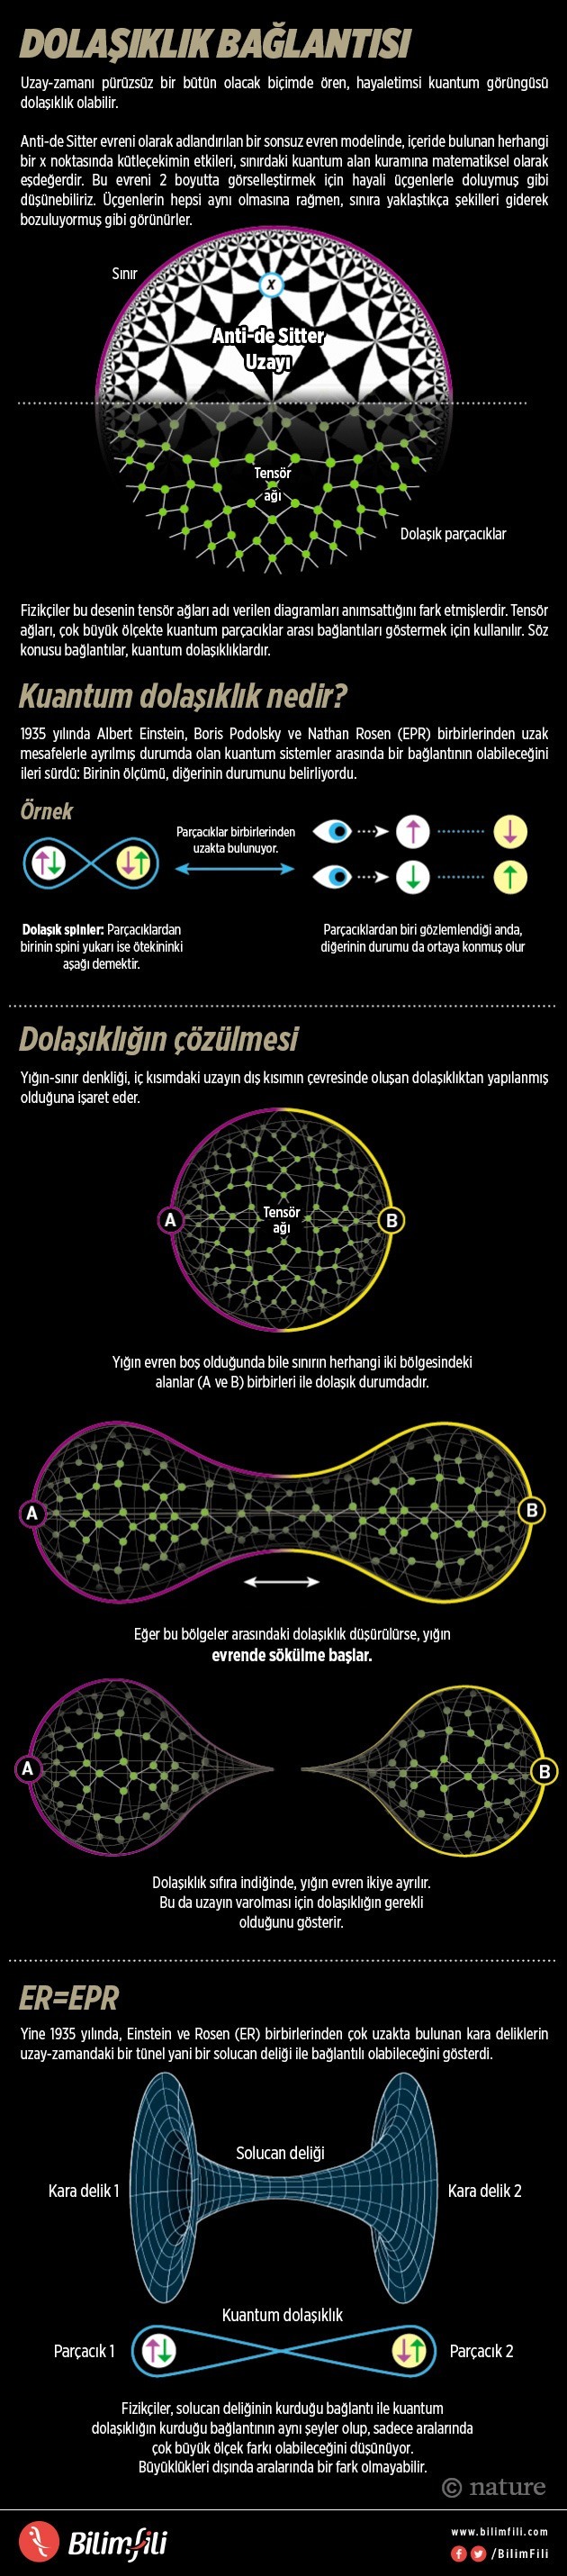 uzay-zamanin-kuantum-kaynagi-infografik-bilimfilicom